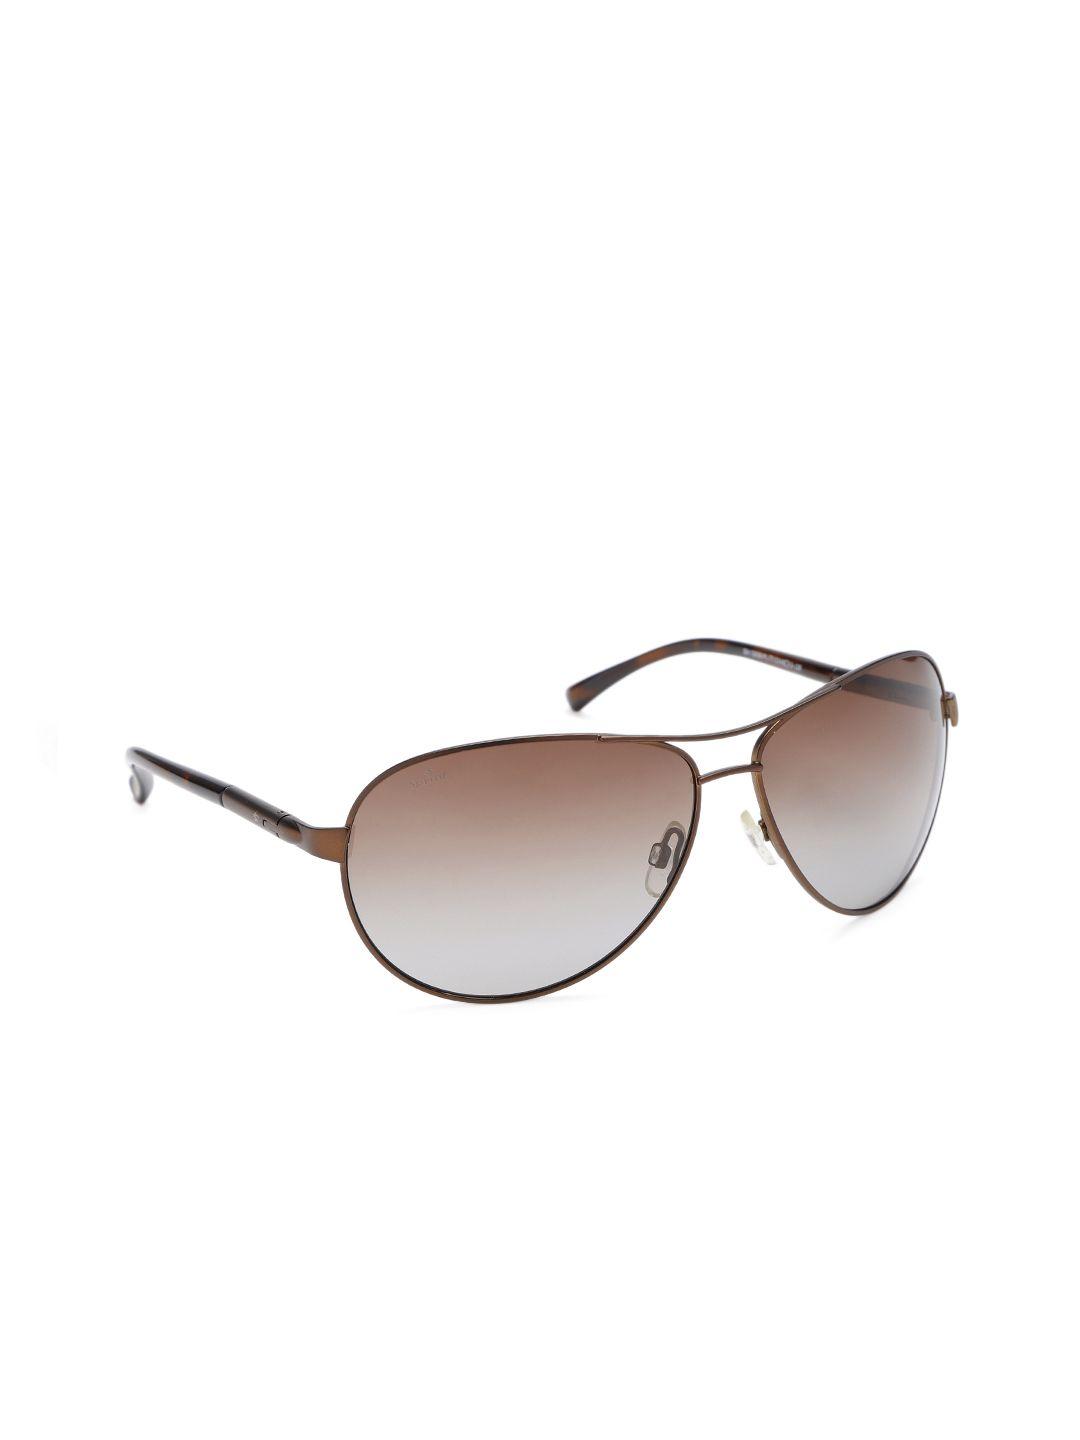 sprint men brown lens aviator sunglasses with polarised lens 12058 pl tt c3 s